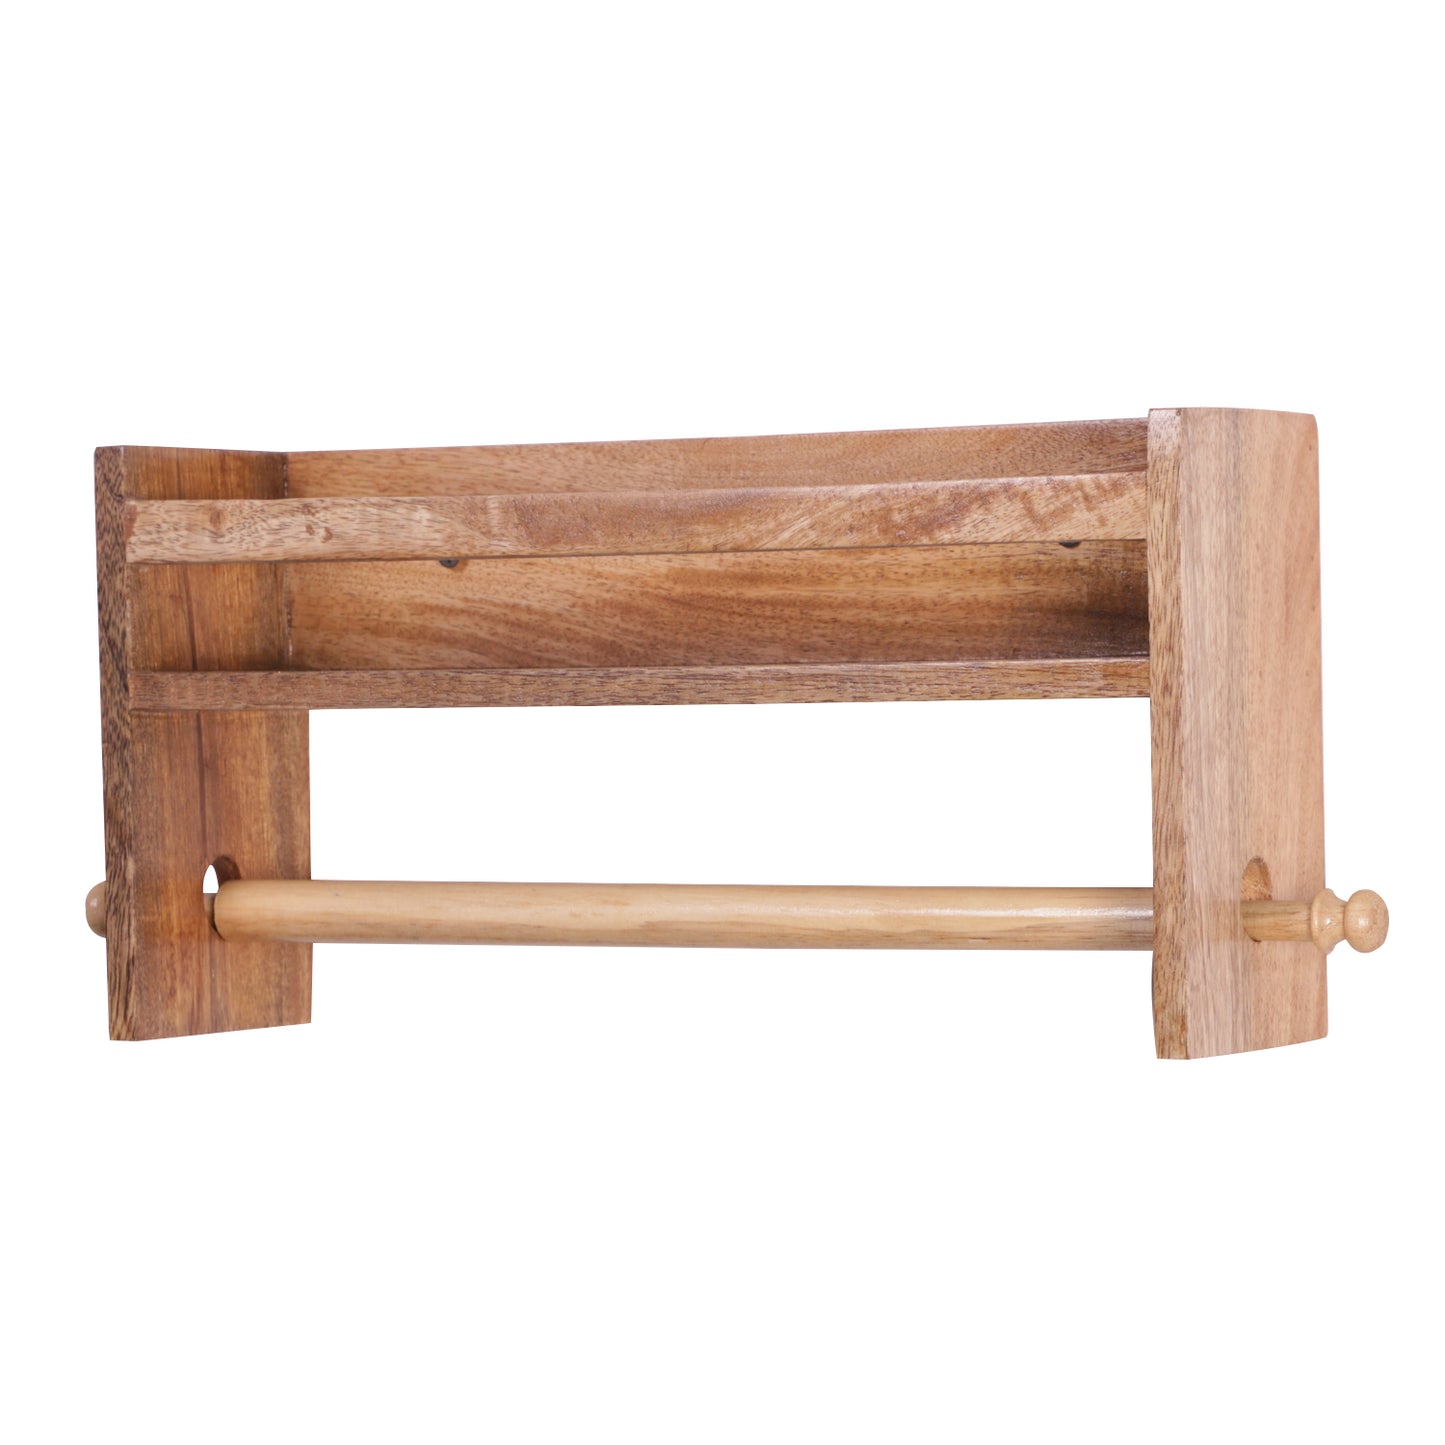 The Weaver's Nest Wooden Towel Holder/Rack with Shelf for Kitchen, Restaurants, Hotels and Washroom